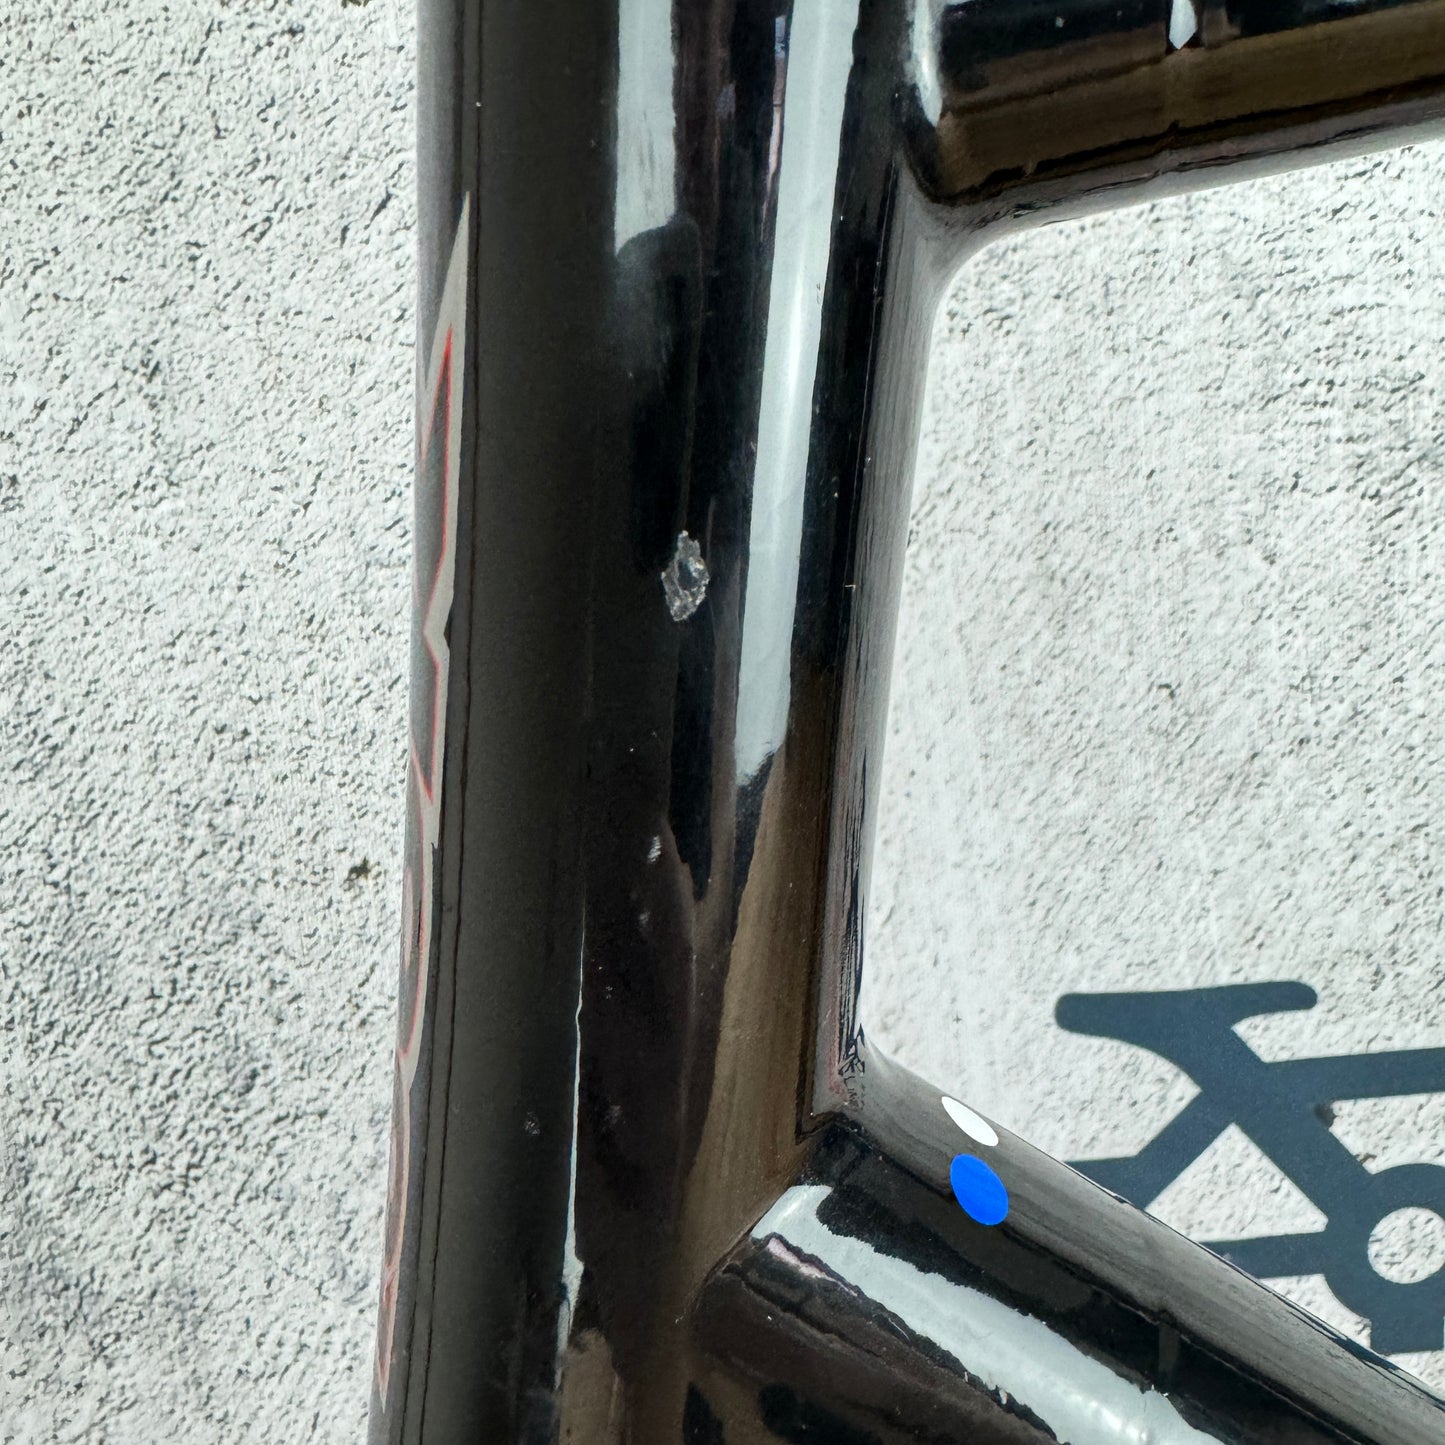 Look KG 461 HR 57cm Rim Brake Carbon Road Bike Frameset 700c 2016g